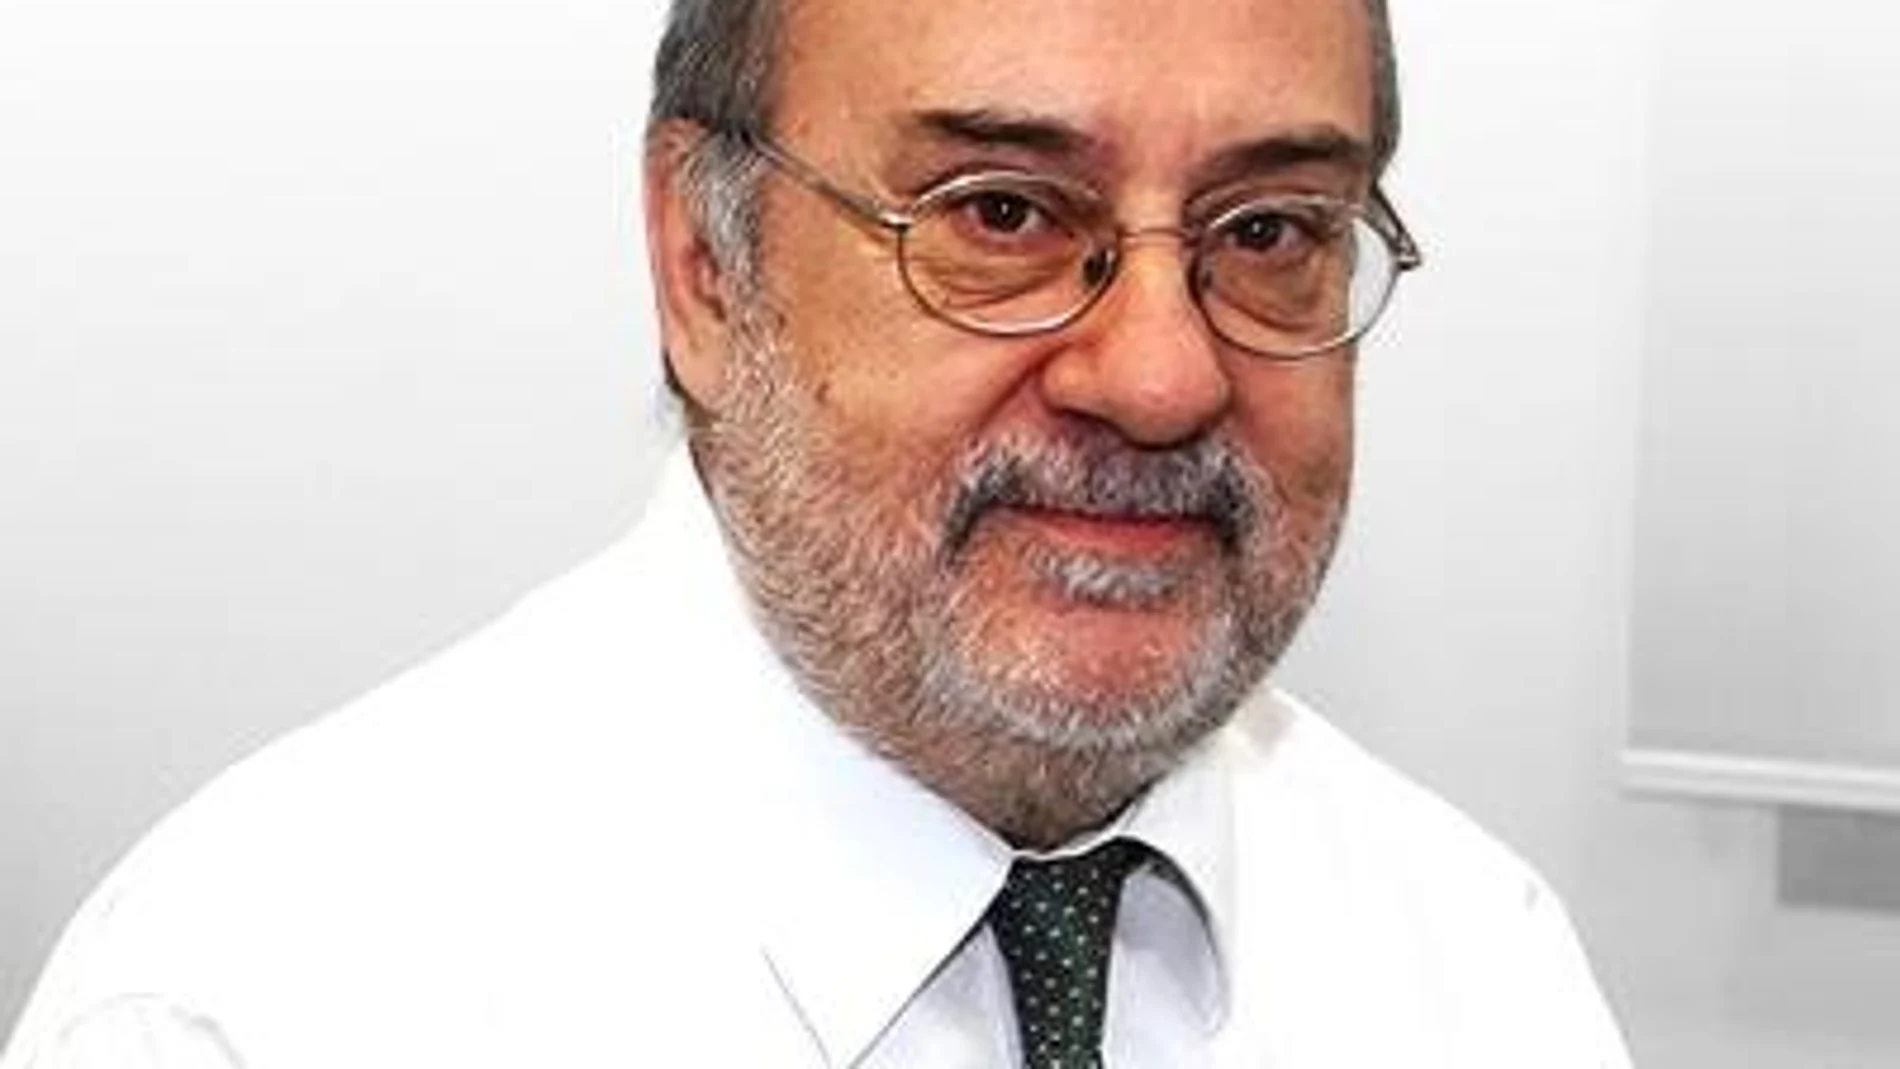 Alfredo Relaño